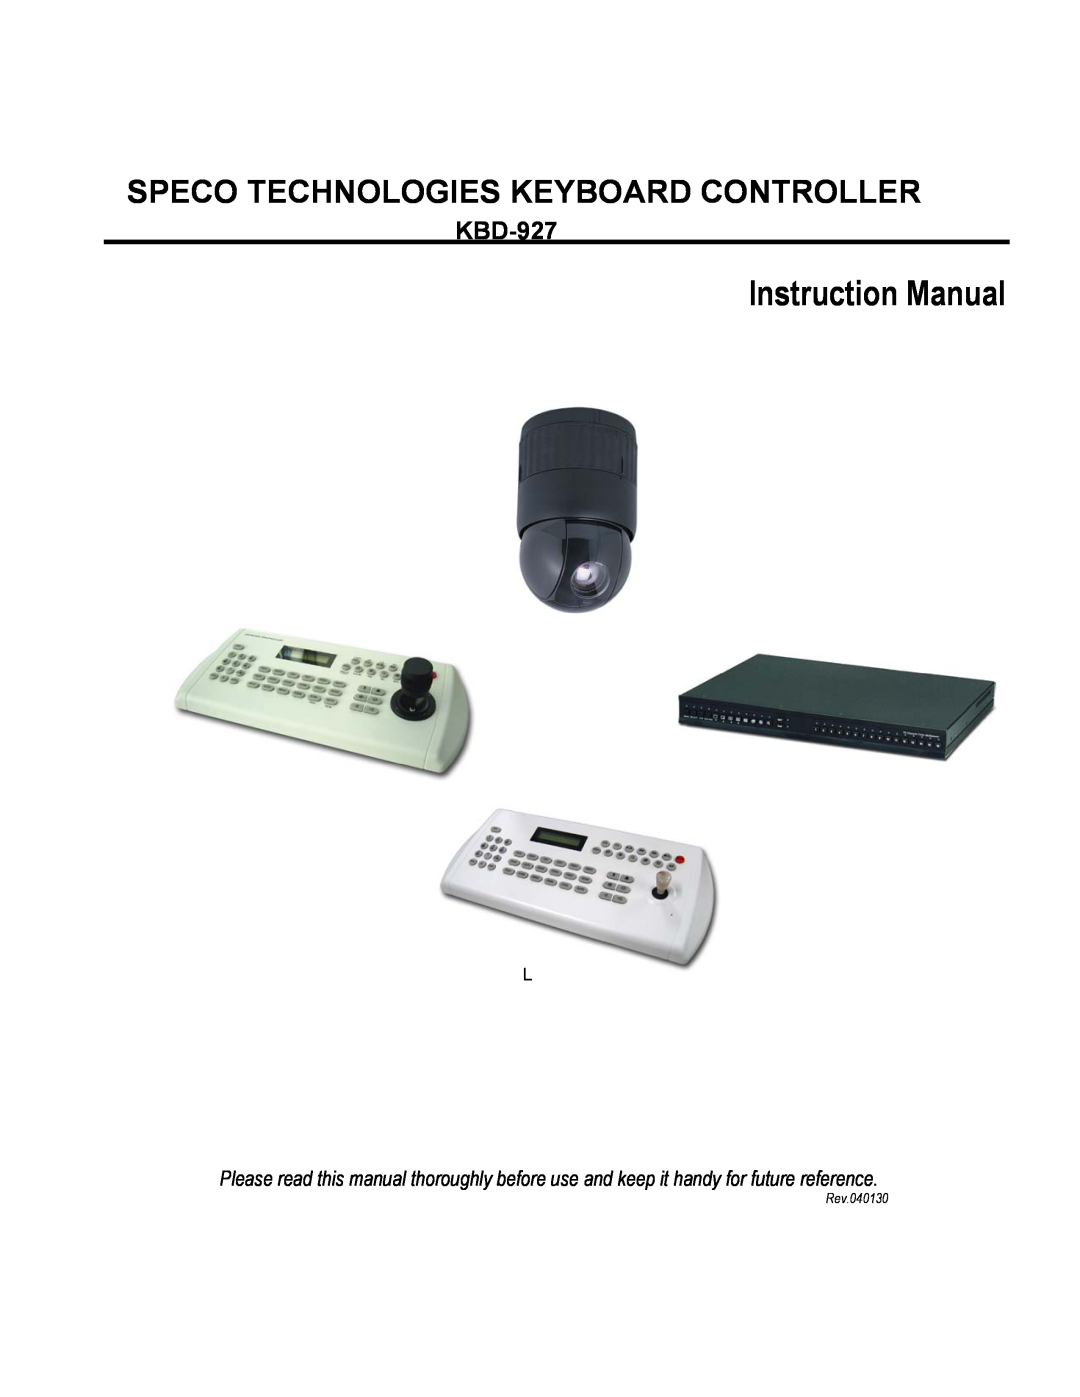 Speco Technologies KBD-927 instruction manual Speco Technologies Keyboard Controller, Instruction Manual, Rev.040130 